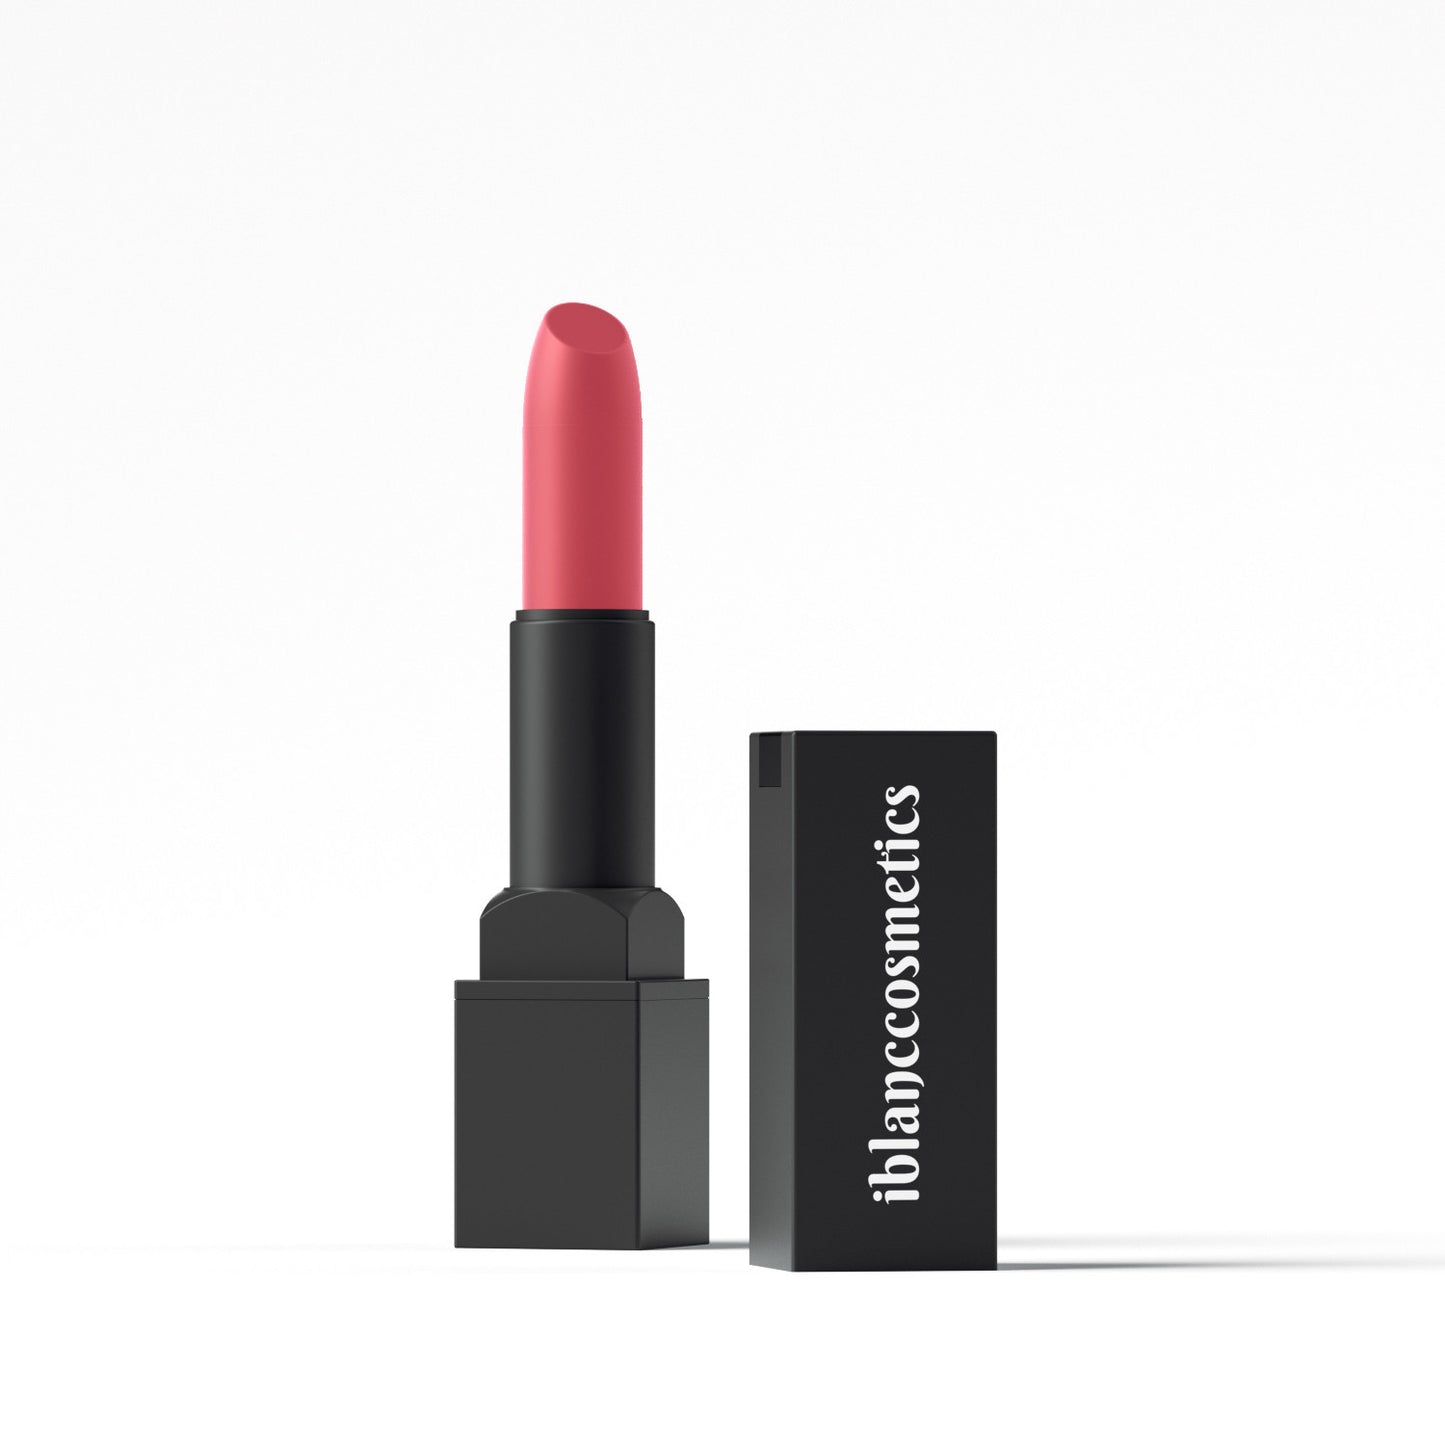 Lipstick-8090